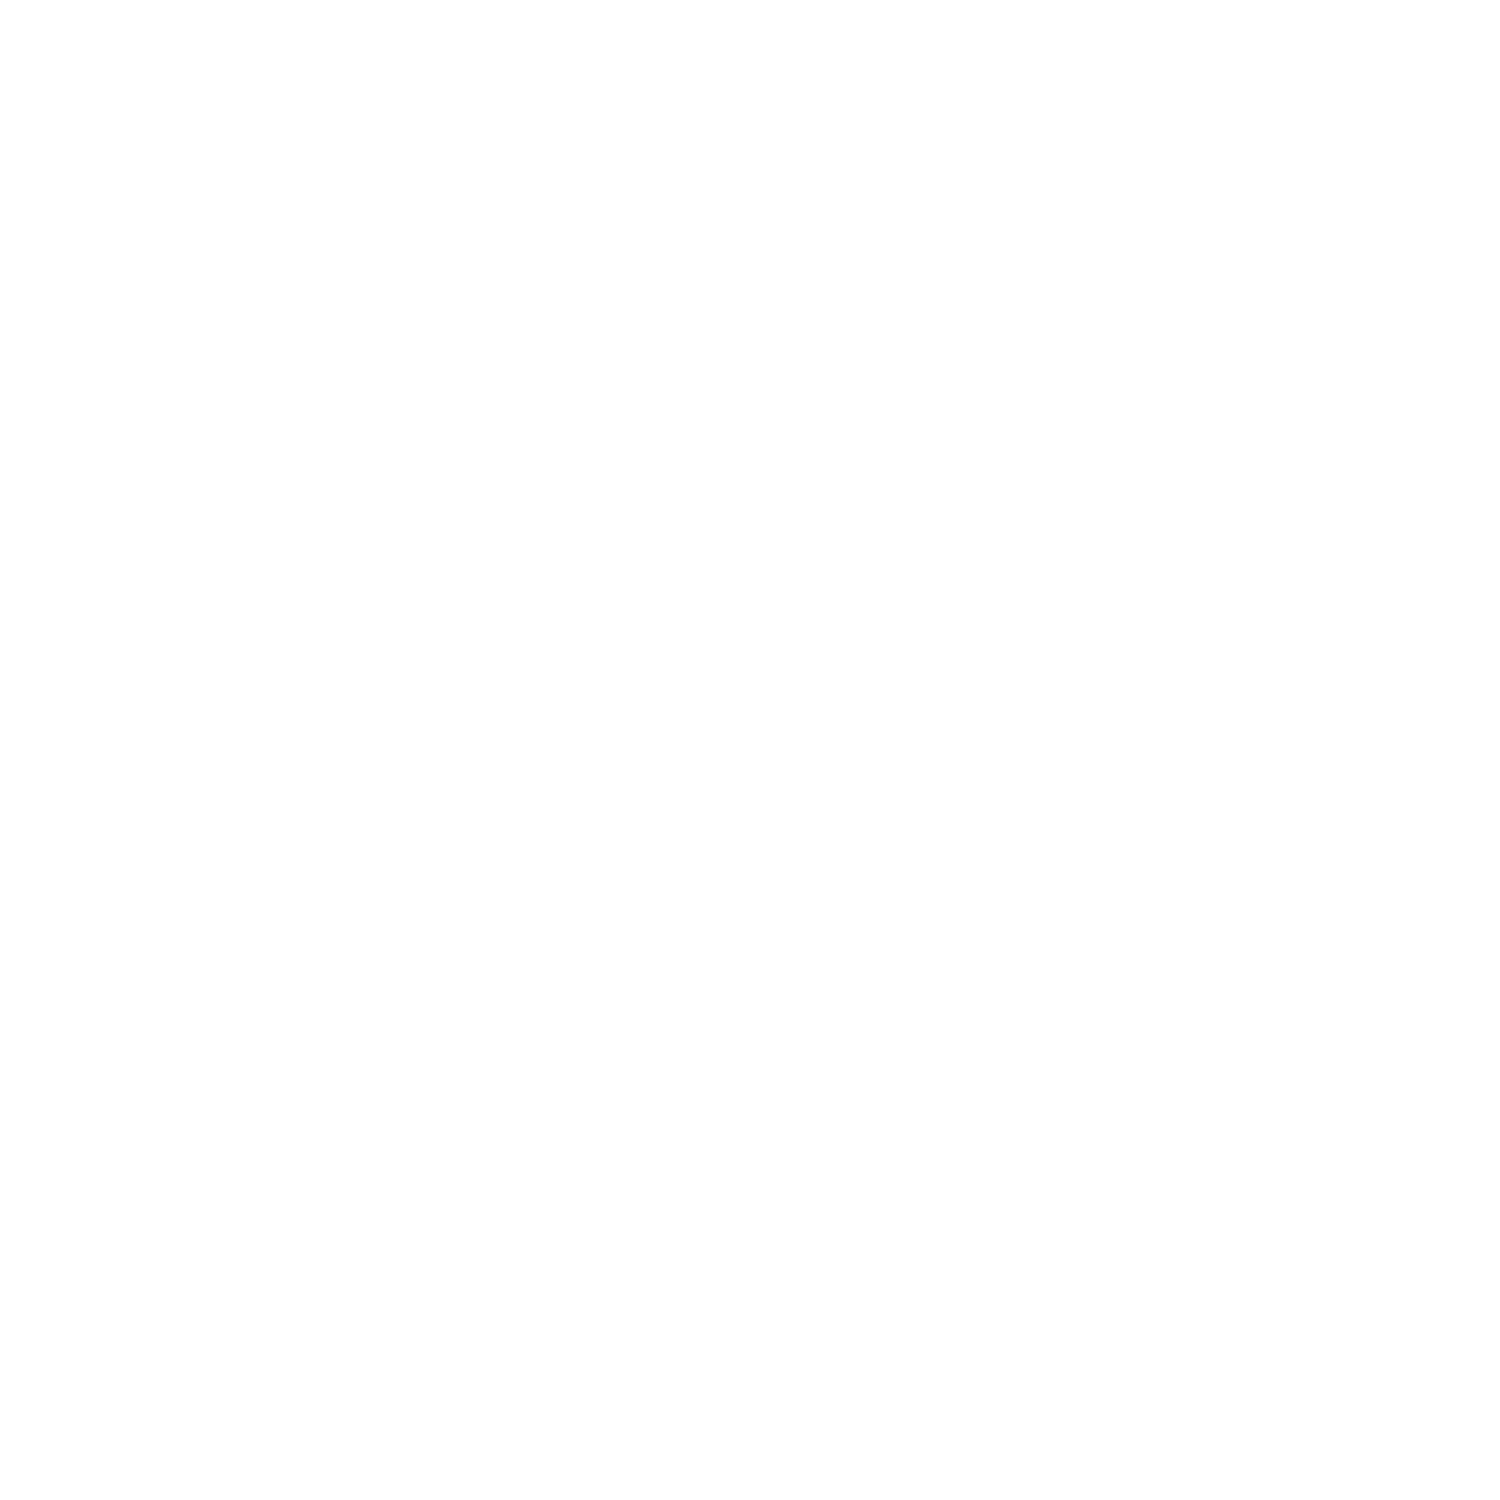 LIZETTE MARIE INTERIOR DESIGN